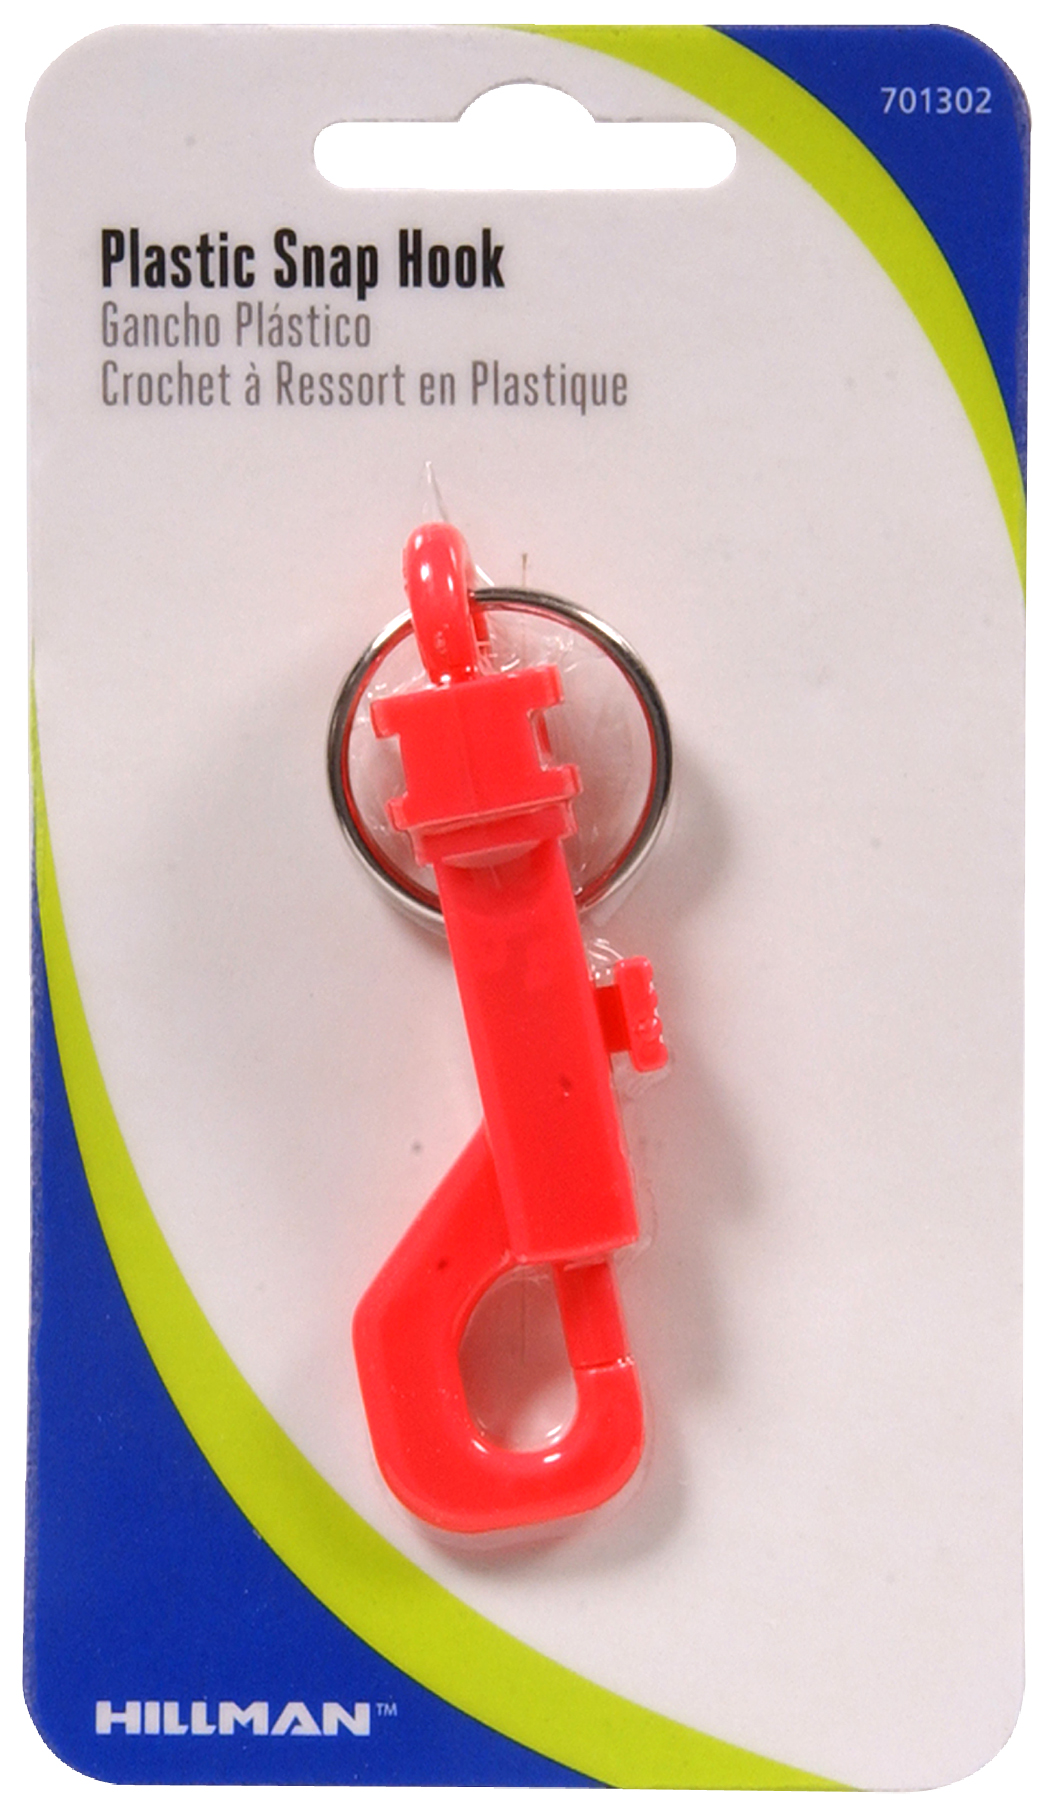 Plastic Snap Hook/Key Clip - image 1 of 2